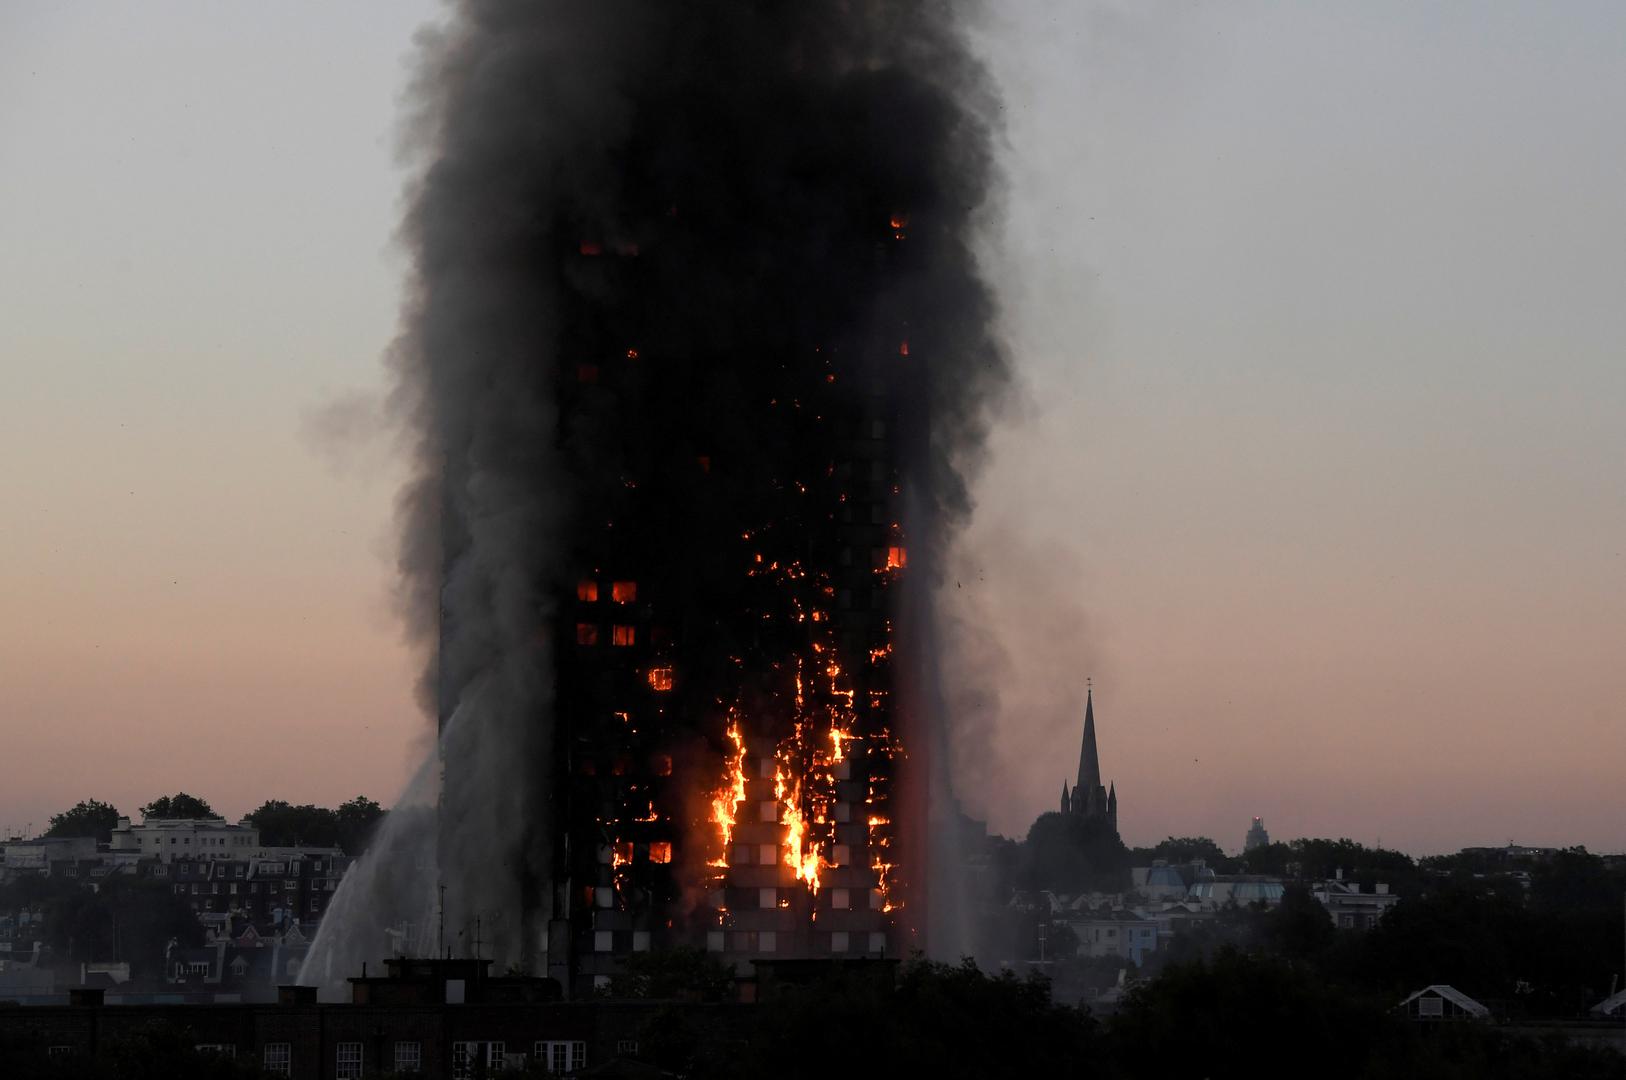 Dim i vatra progutali zgradu na zapadu Londona